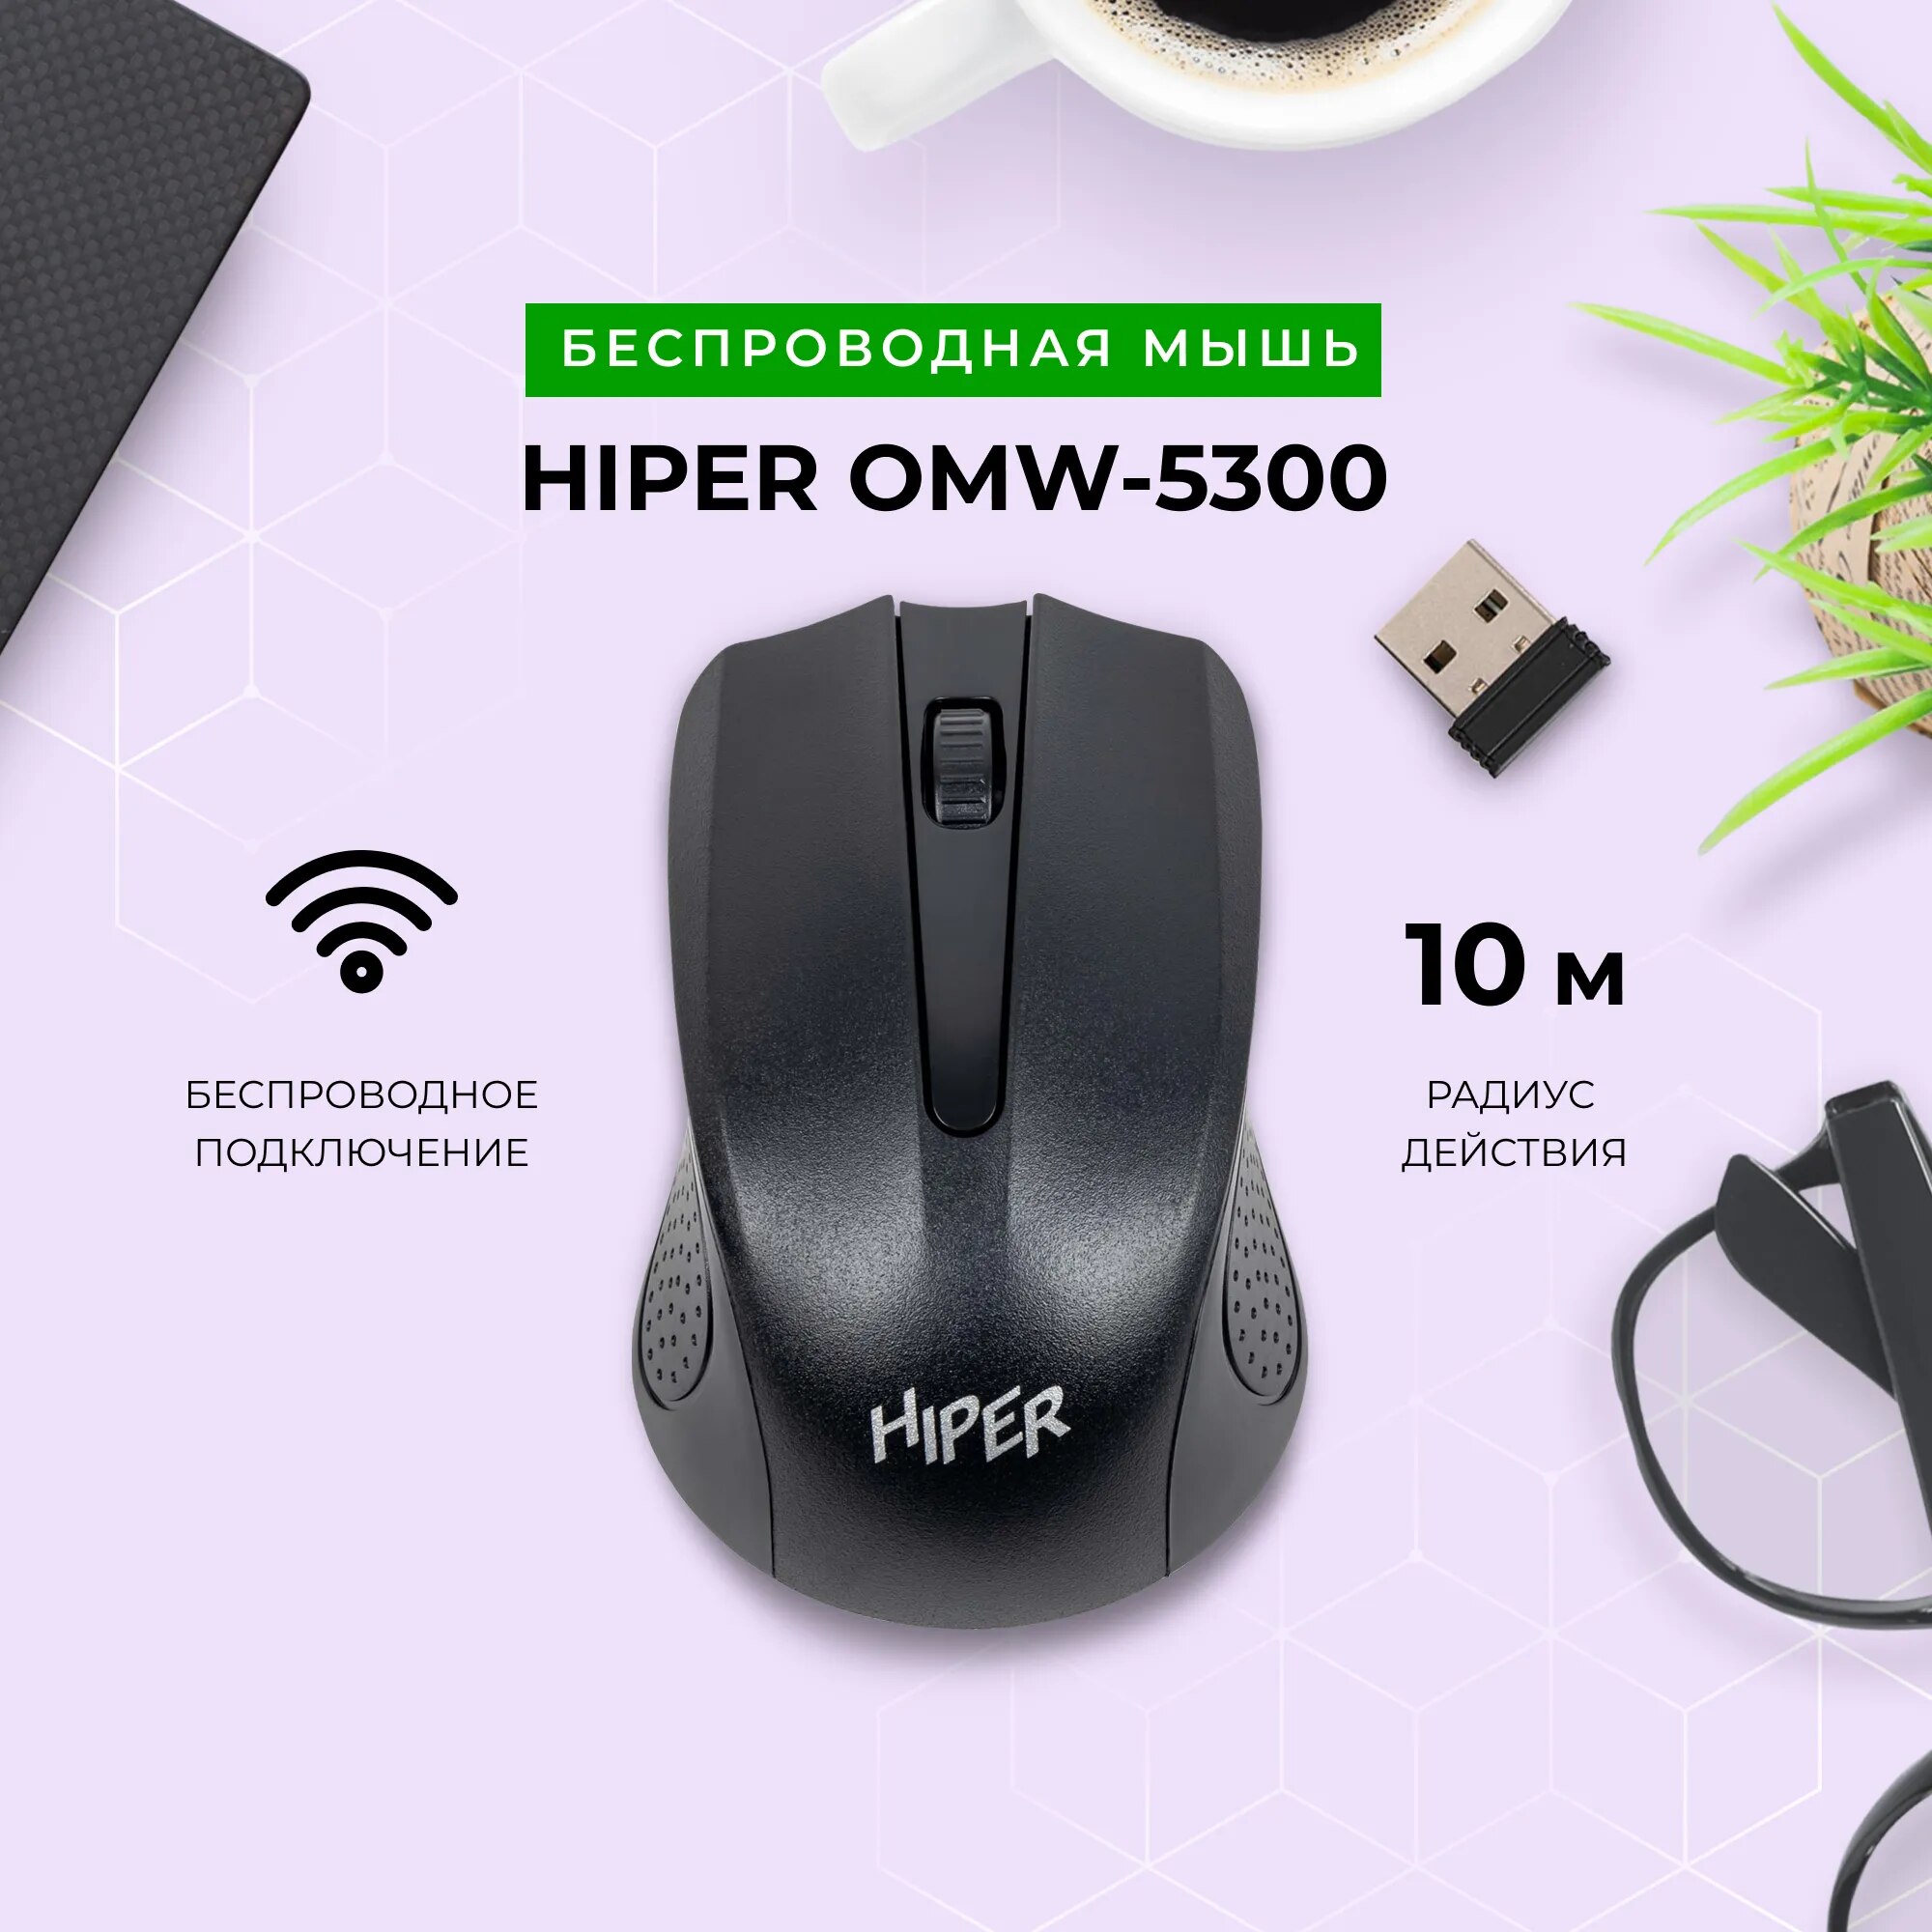 Беспроводная мышь HIPER OMW-5300 черная